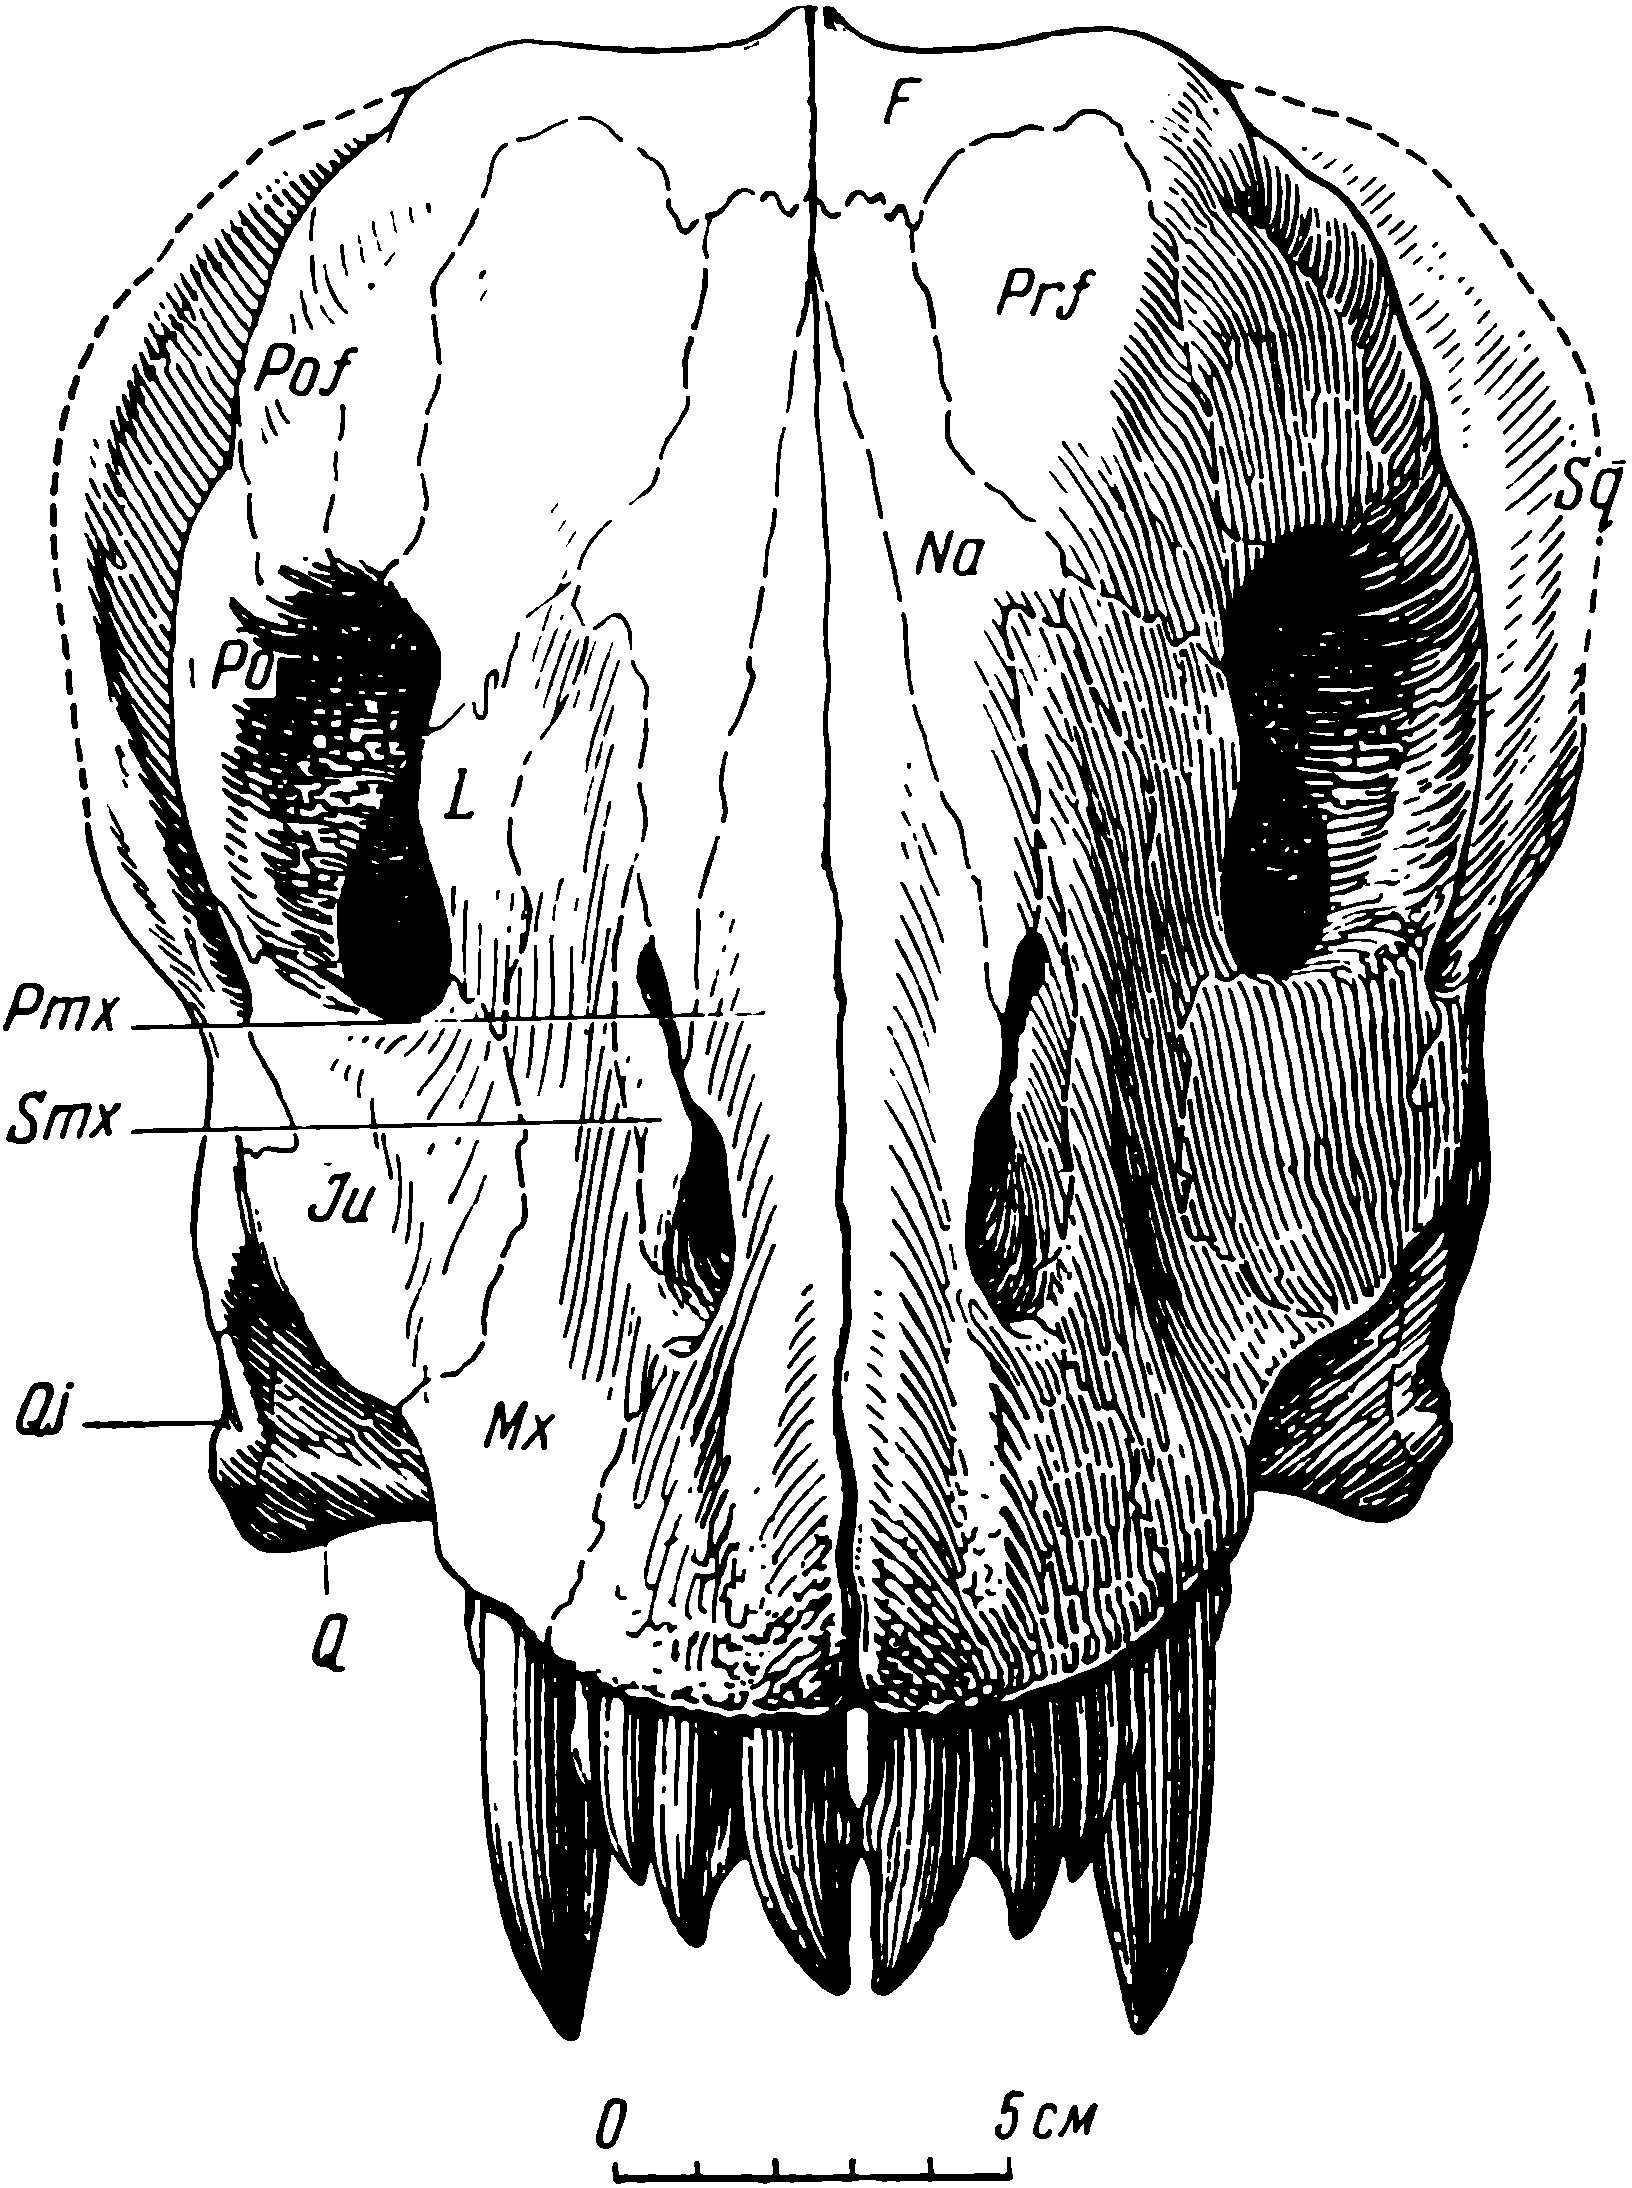 Рис. 5. Deuterosaurus biaruicus Eichw. Реконструкция черепа, вид спереди. Обозначения см. рис. 3; кроме того: Smx — Septomaxillare; Q — quadratum; Qj — quadratojugalia